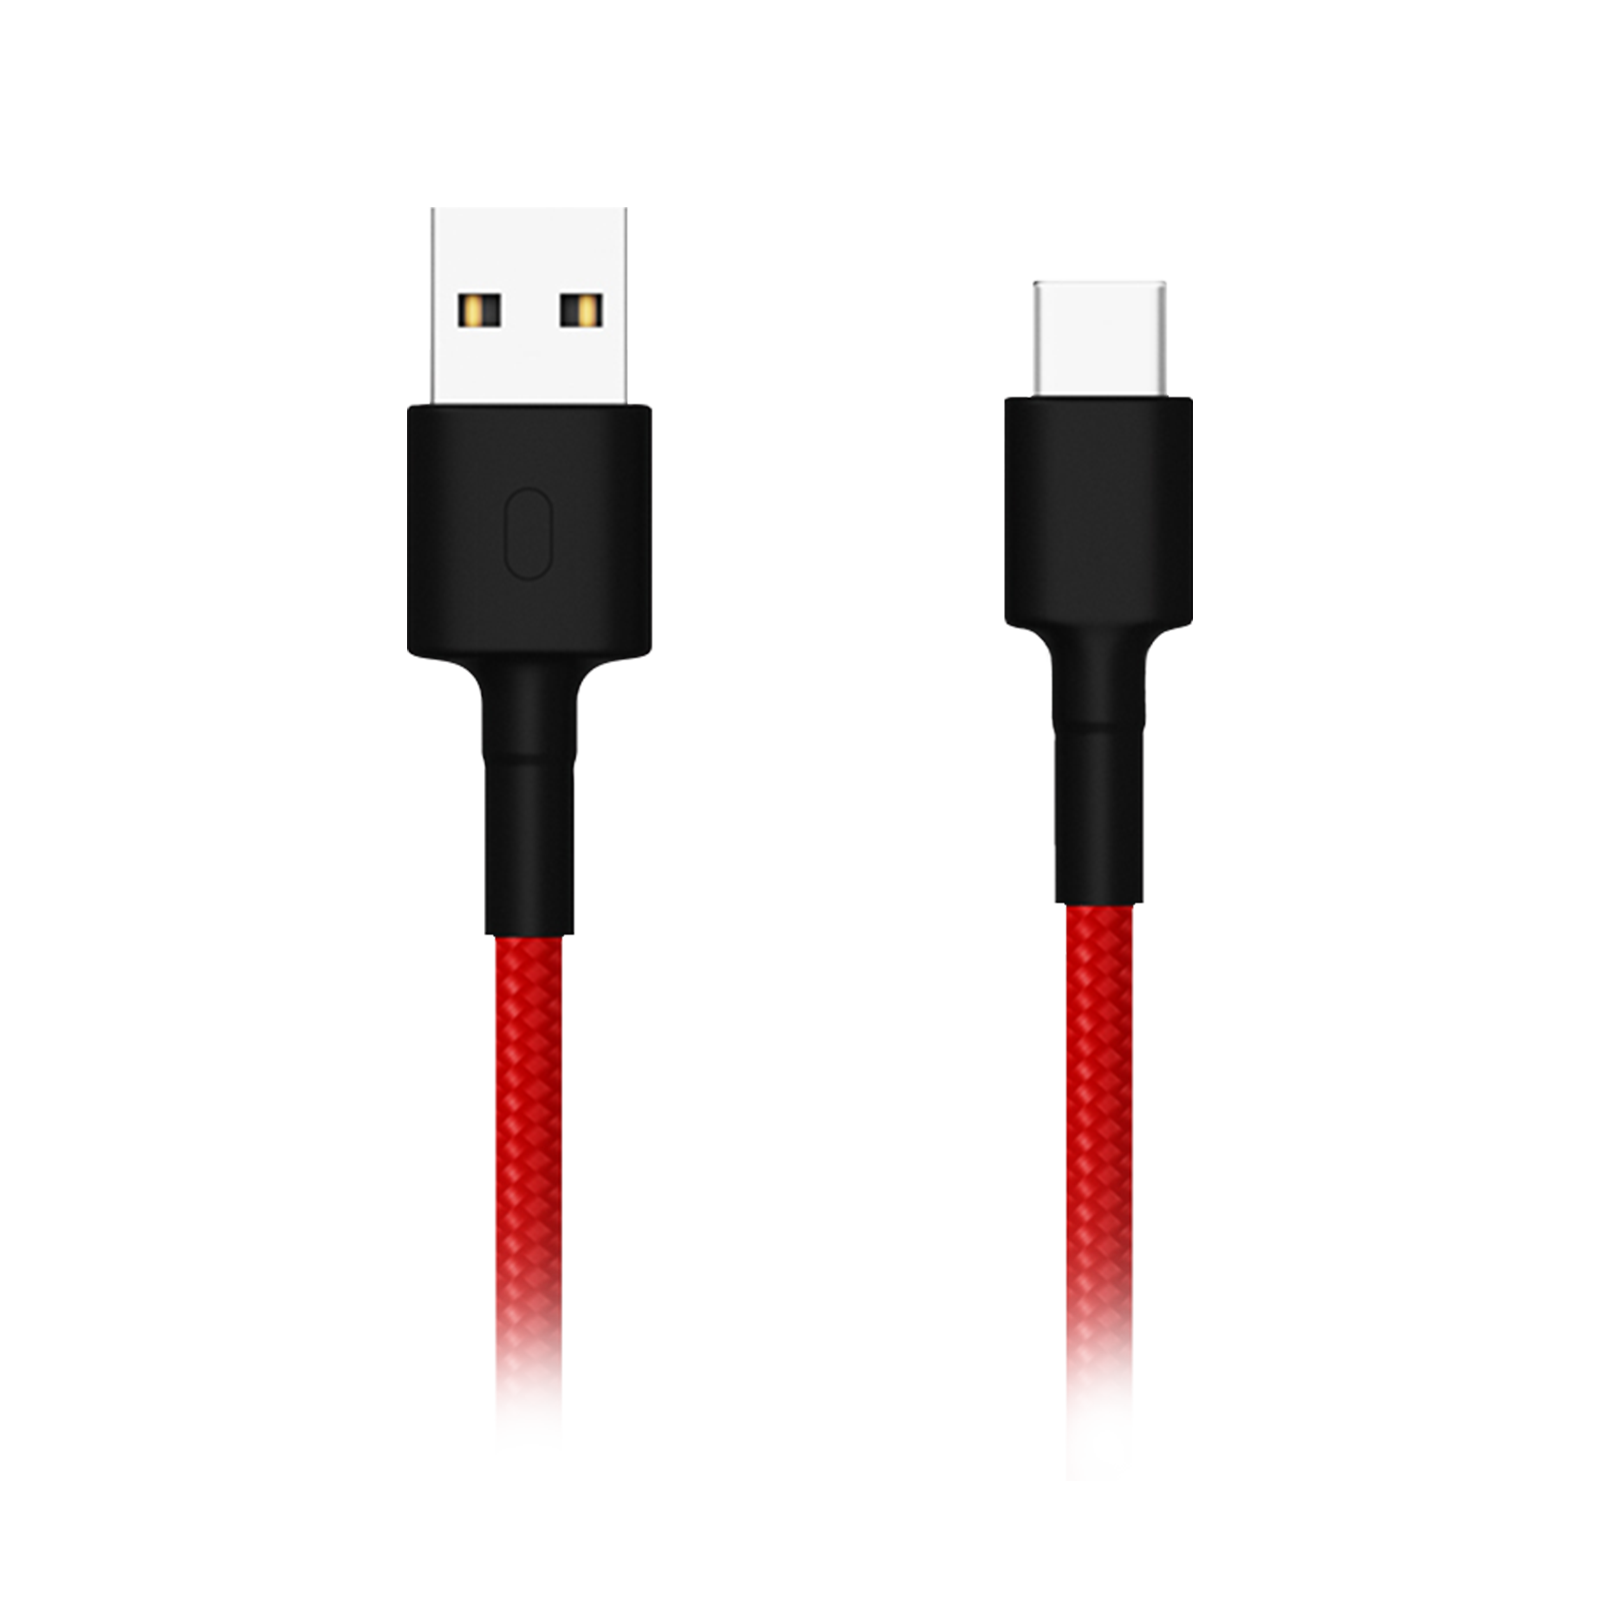 Mi Braided USB Type-C Cable 100cm Red 100cm